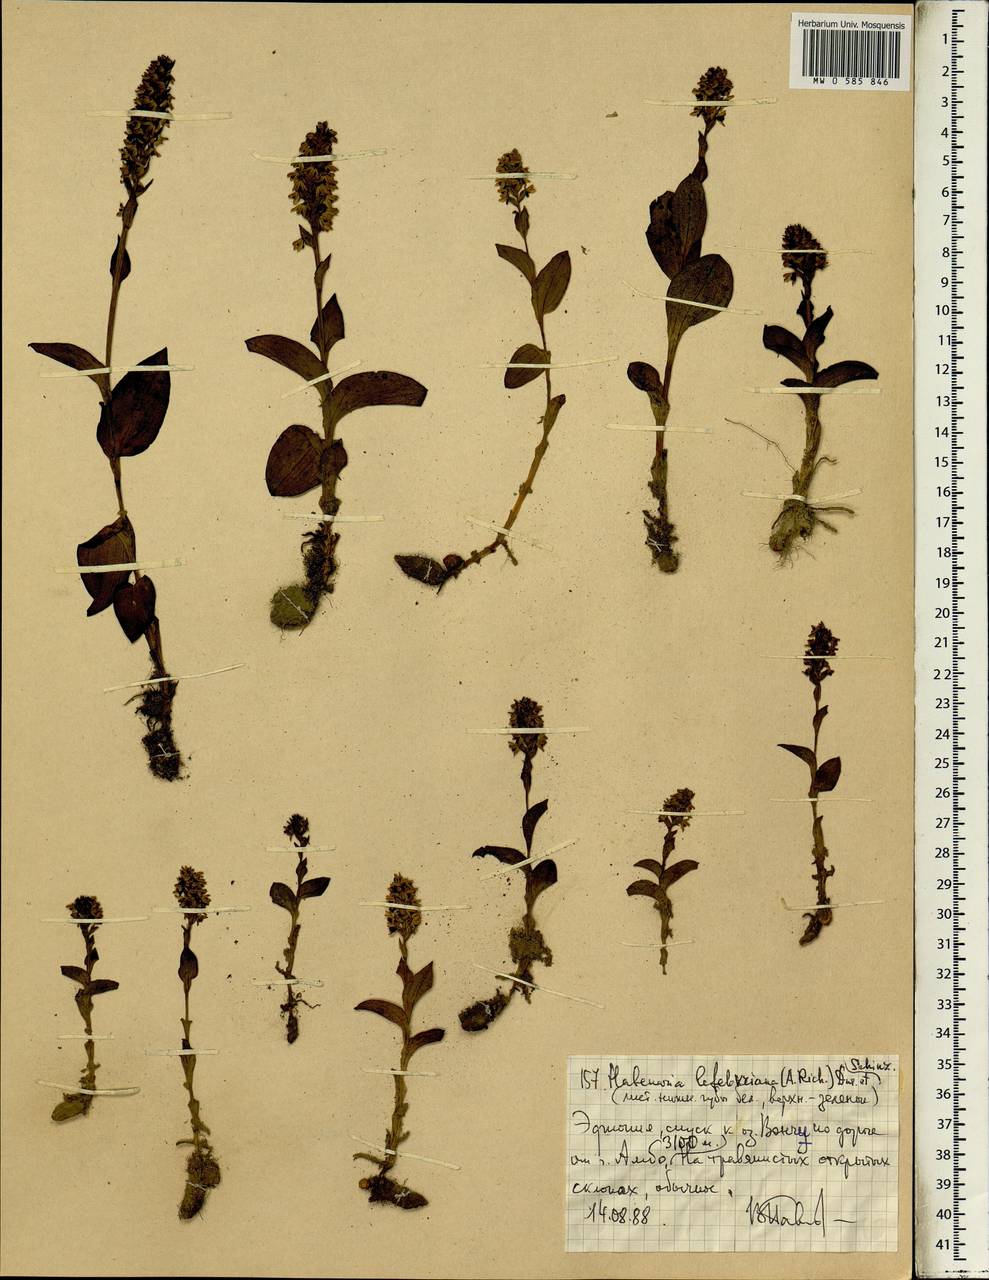 Habenaria lefebureana (A.Rich.) T.Durand & Schinz, Africa (AFR) (Ethiopia)